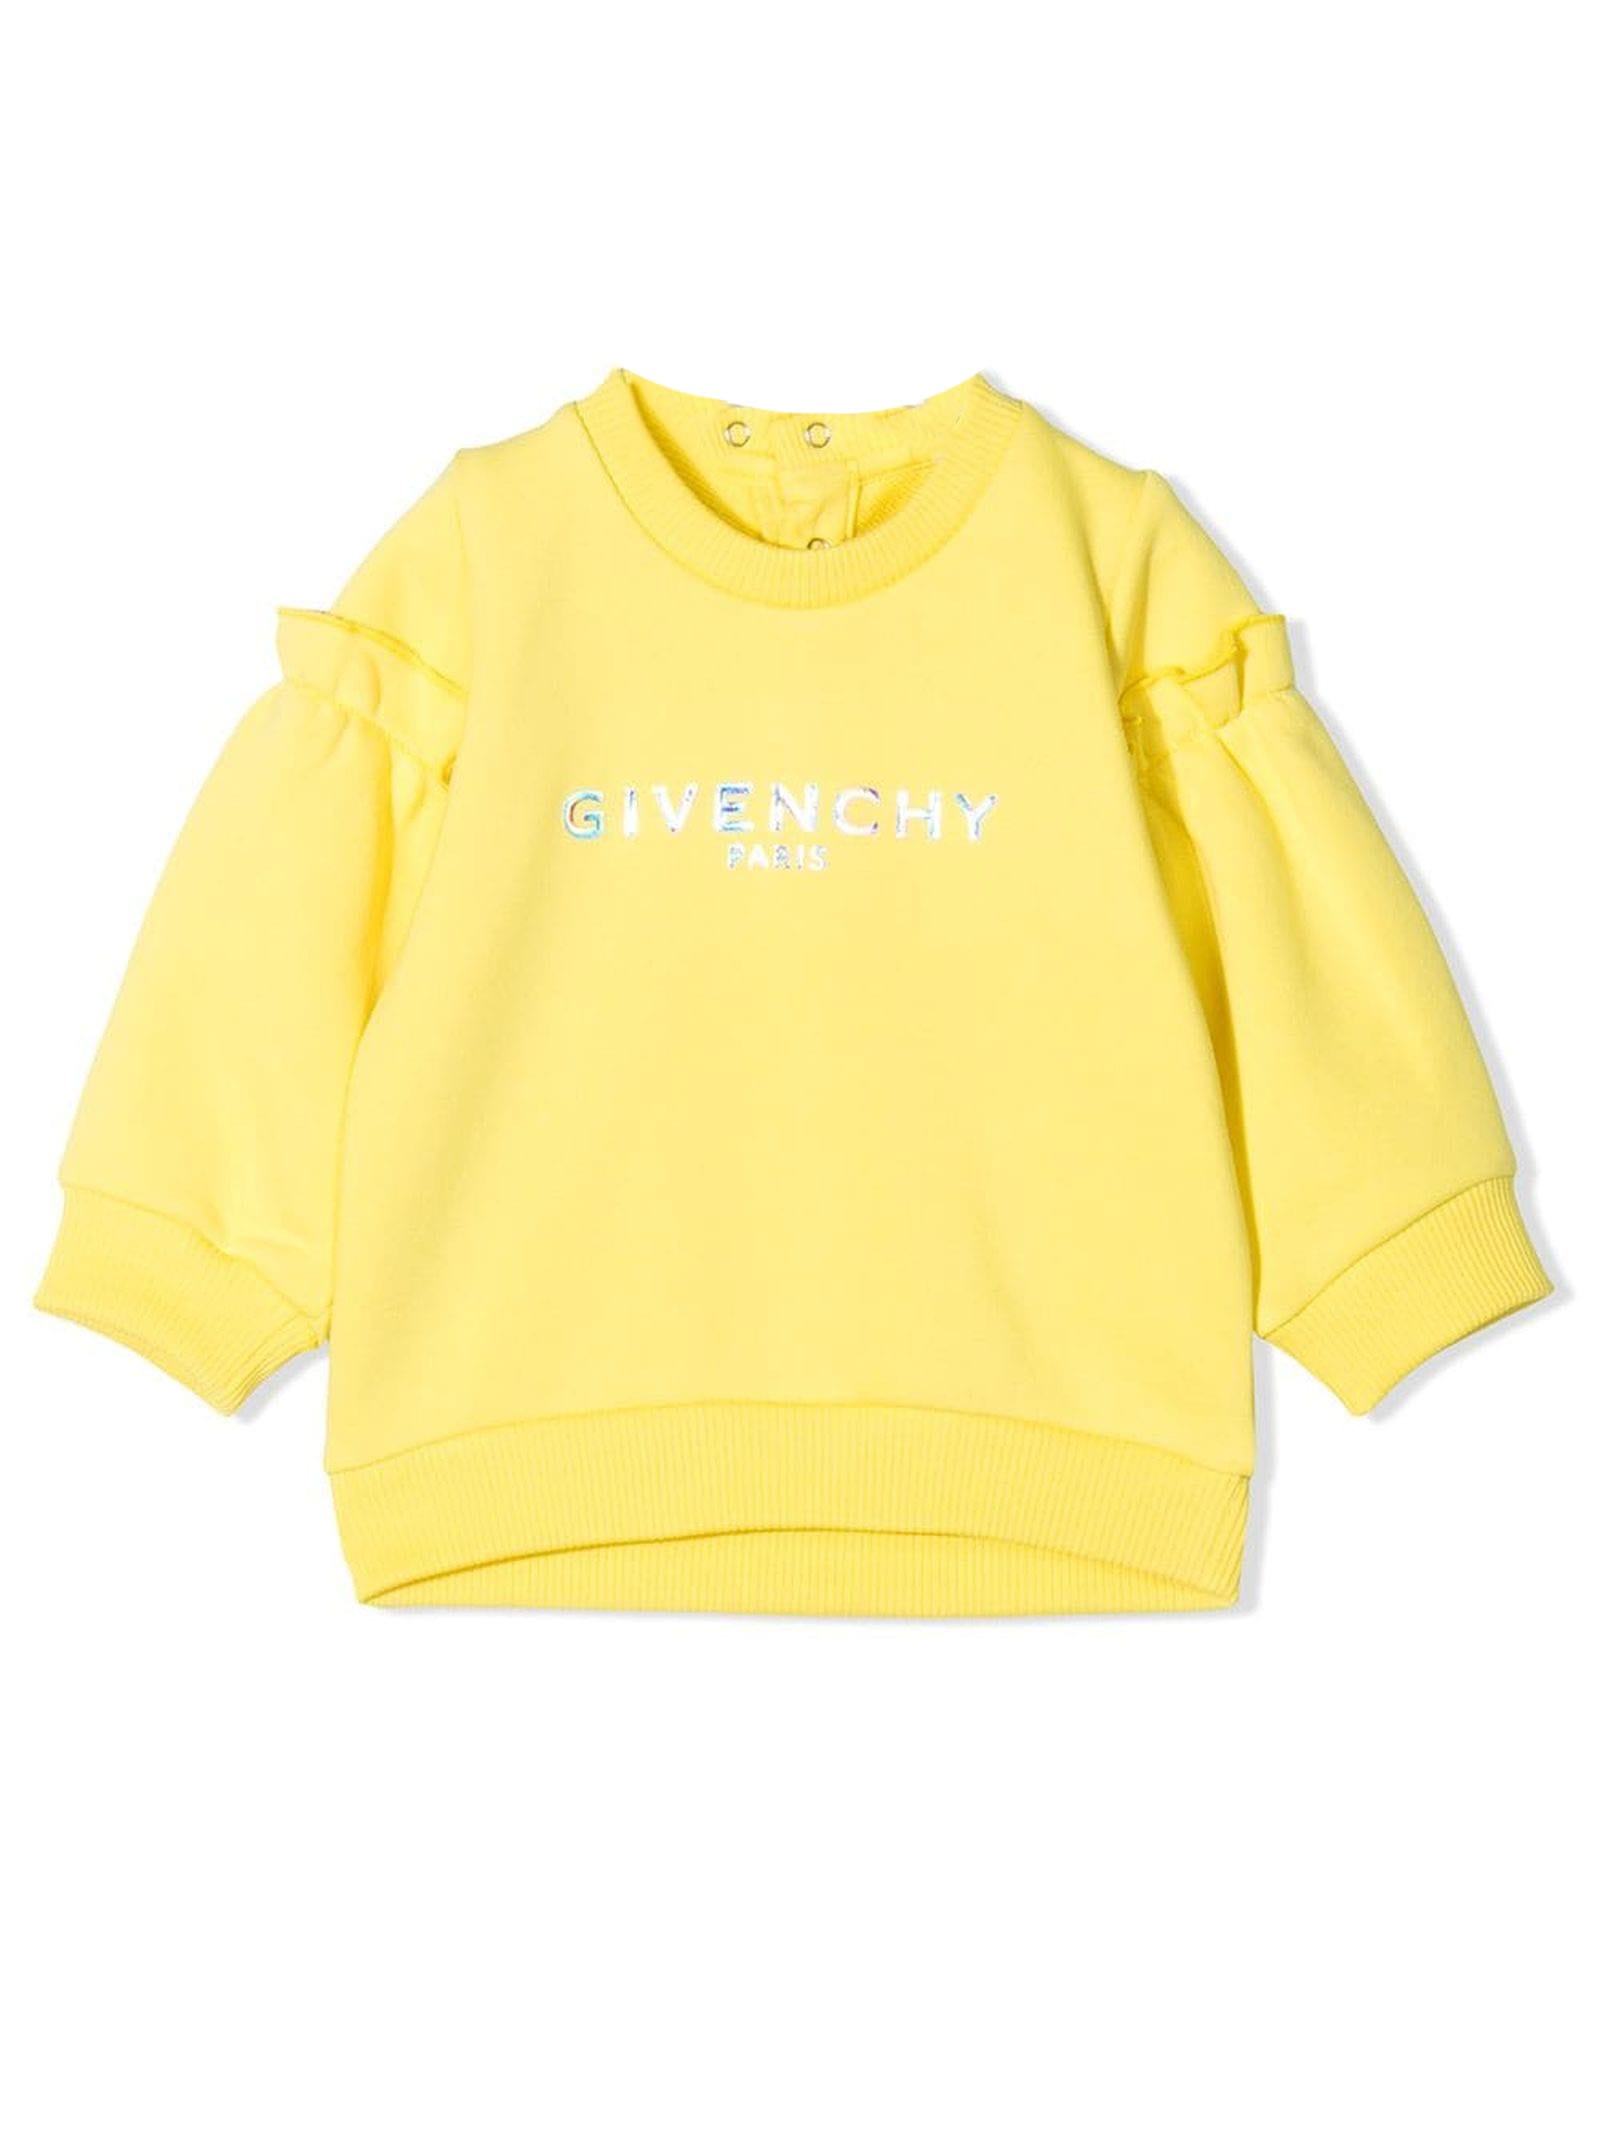 Givenchy Yellow Cotton Blend Sweatshirt